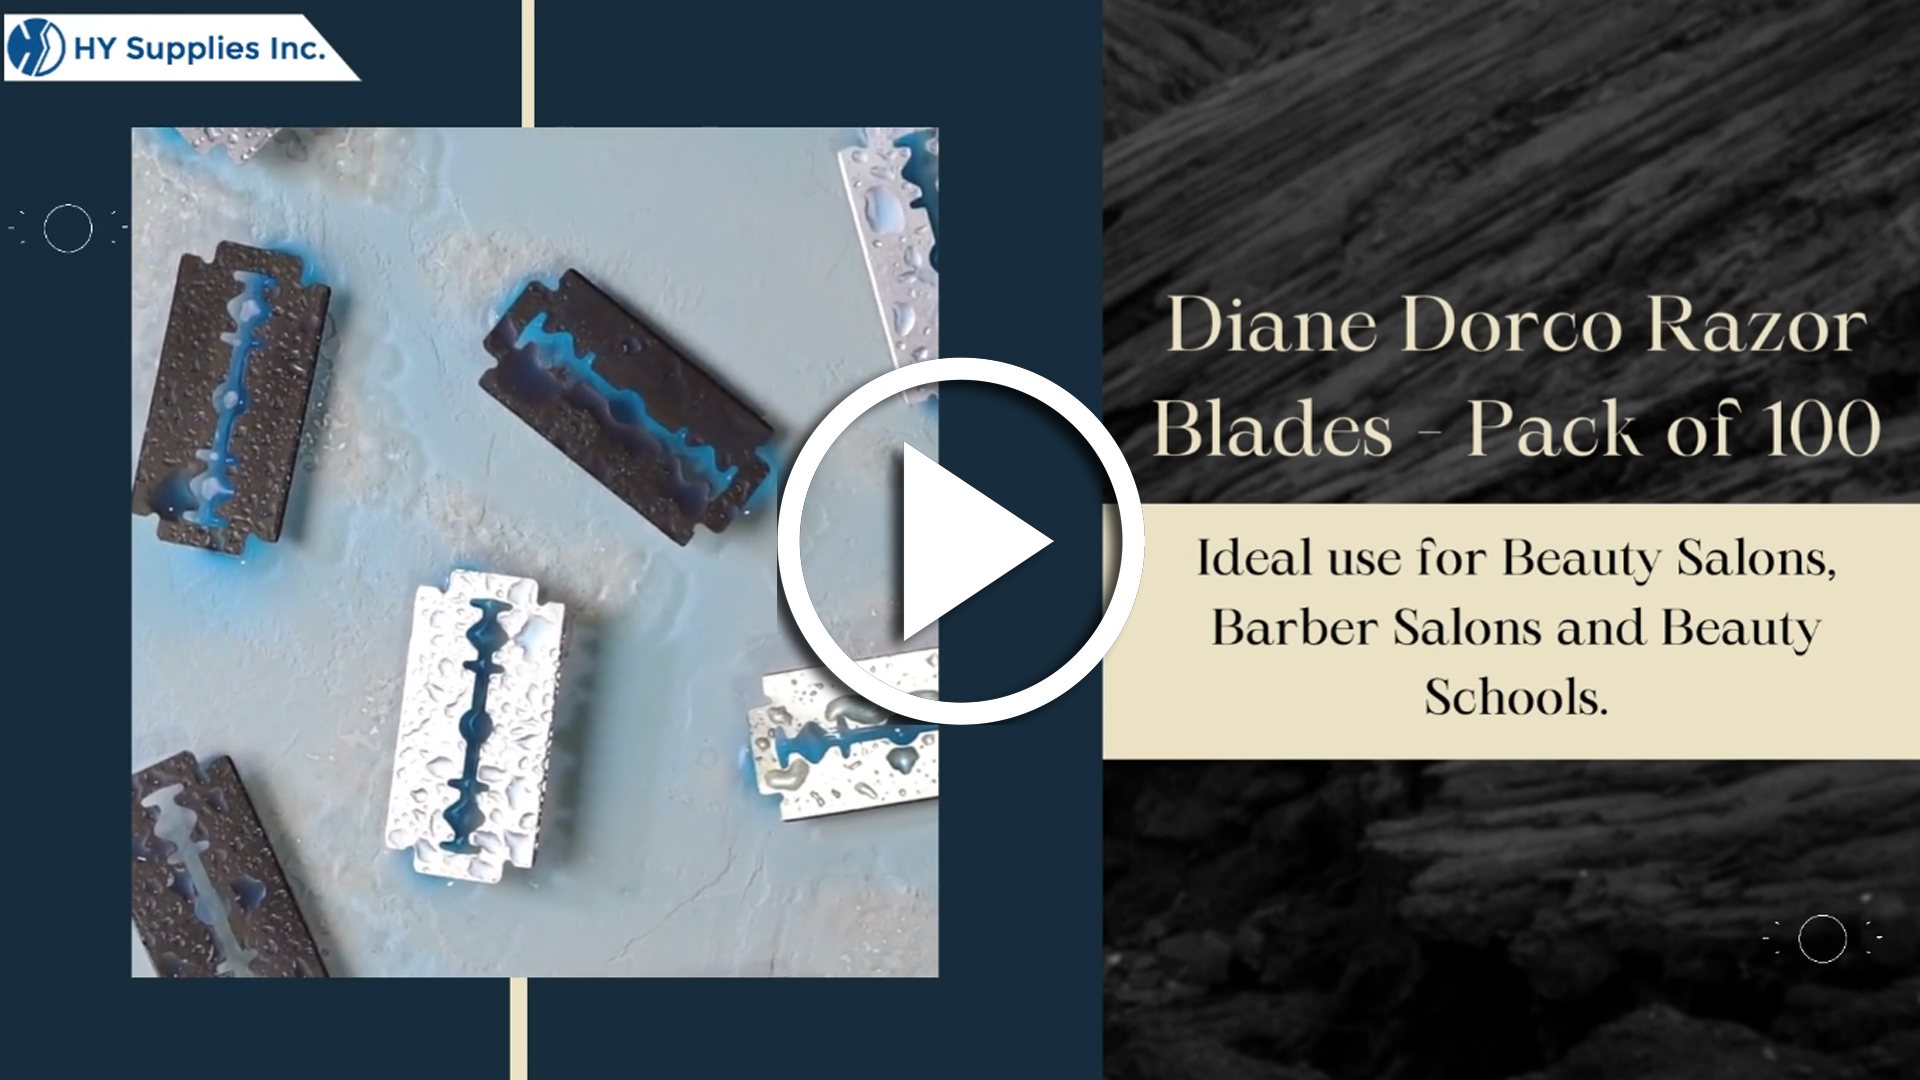 Diane Dorco Razor Blades - Pack of 100